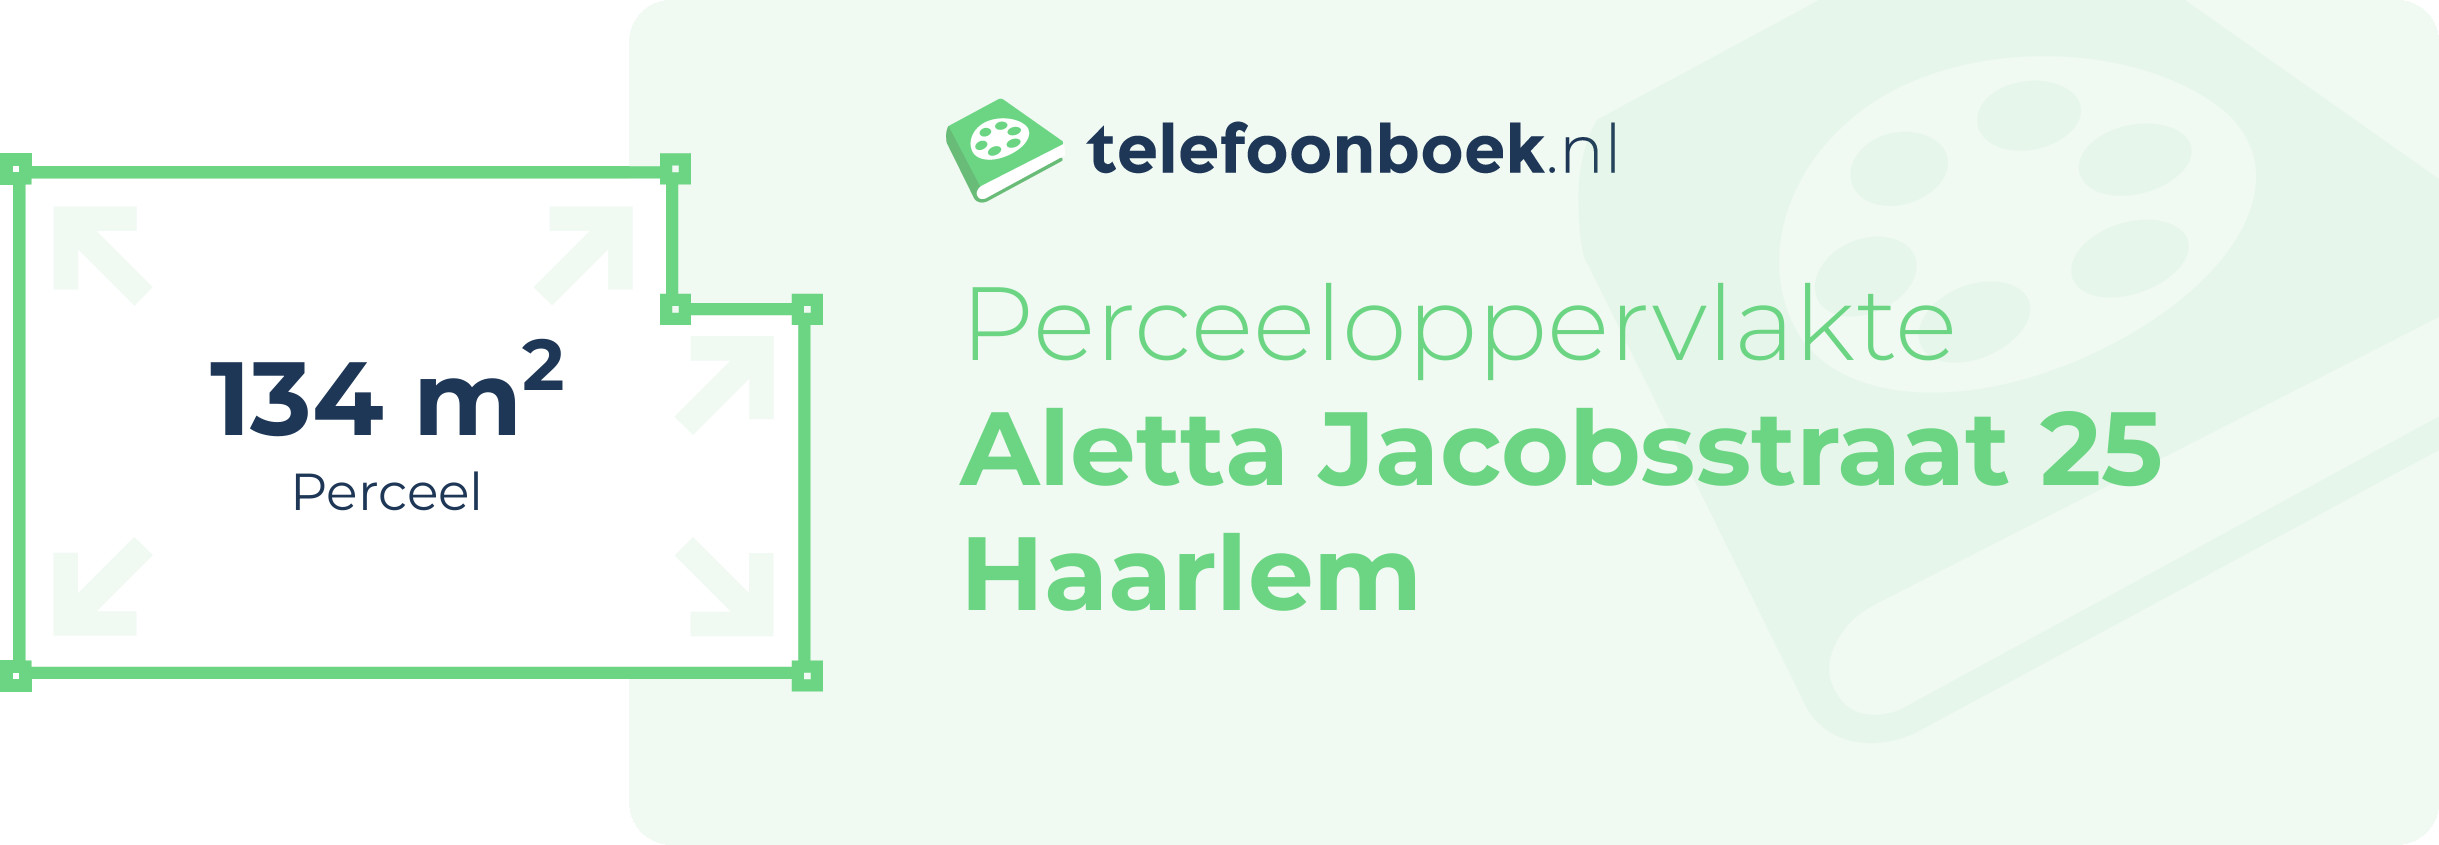 Perceeloppervlakte Aletta Jacobsstraat 25 Haarlem